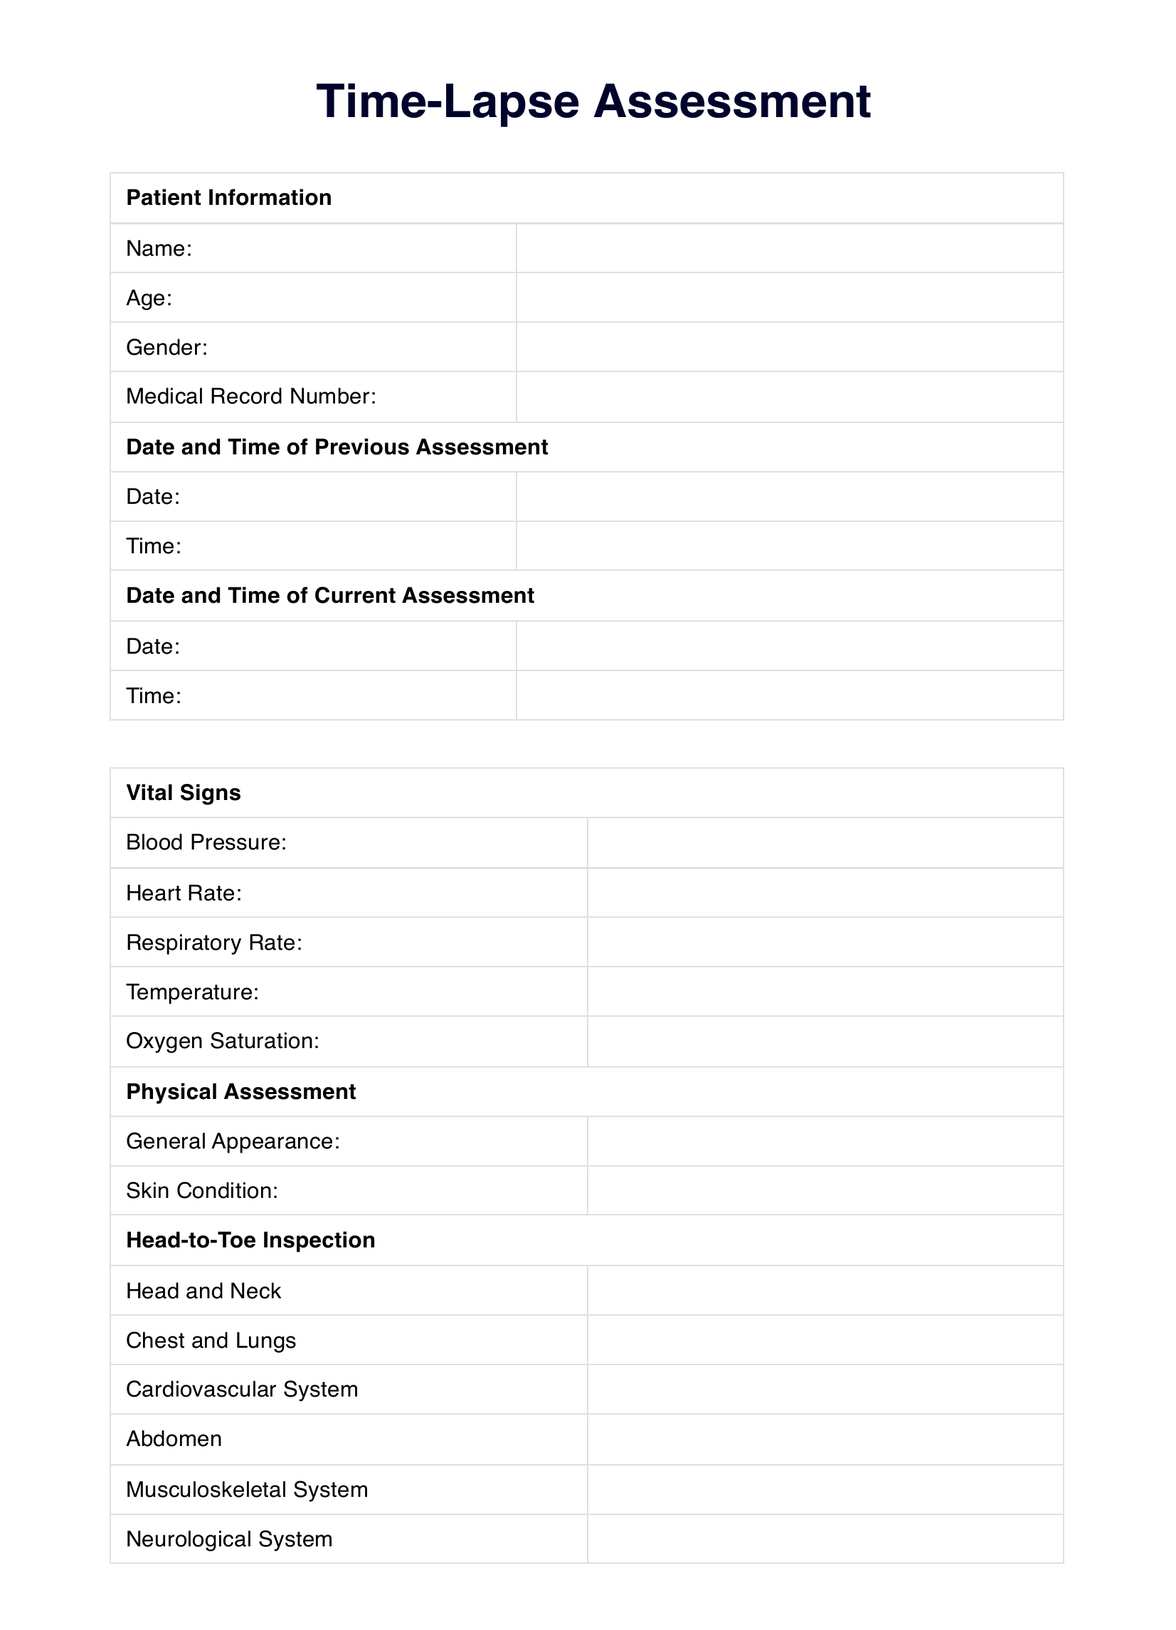 Time Lapse Assessment PDF Example